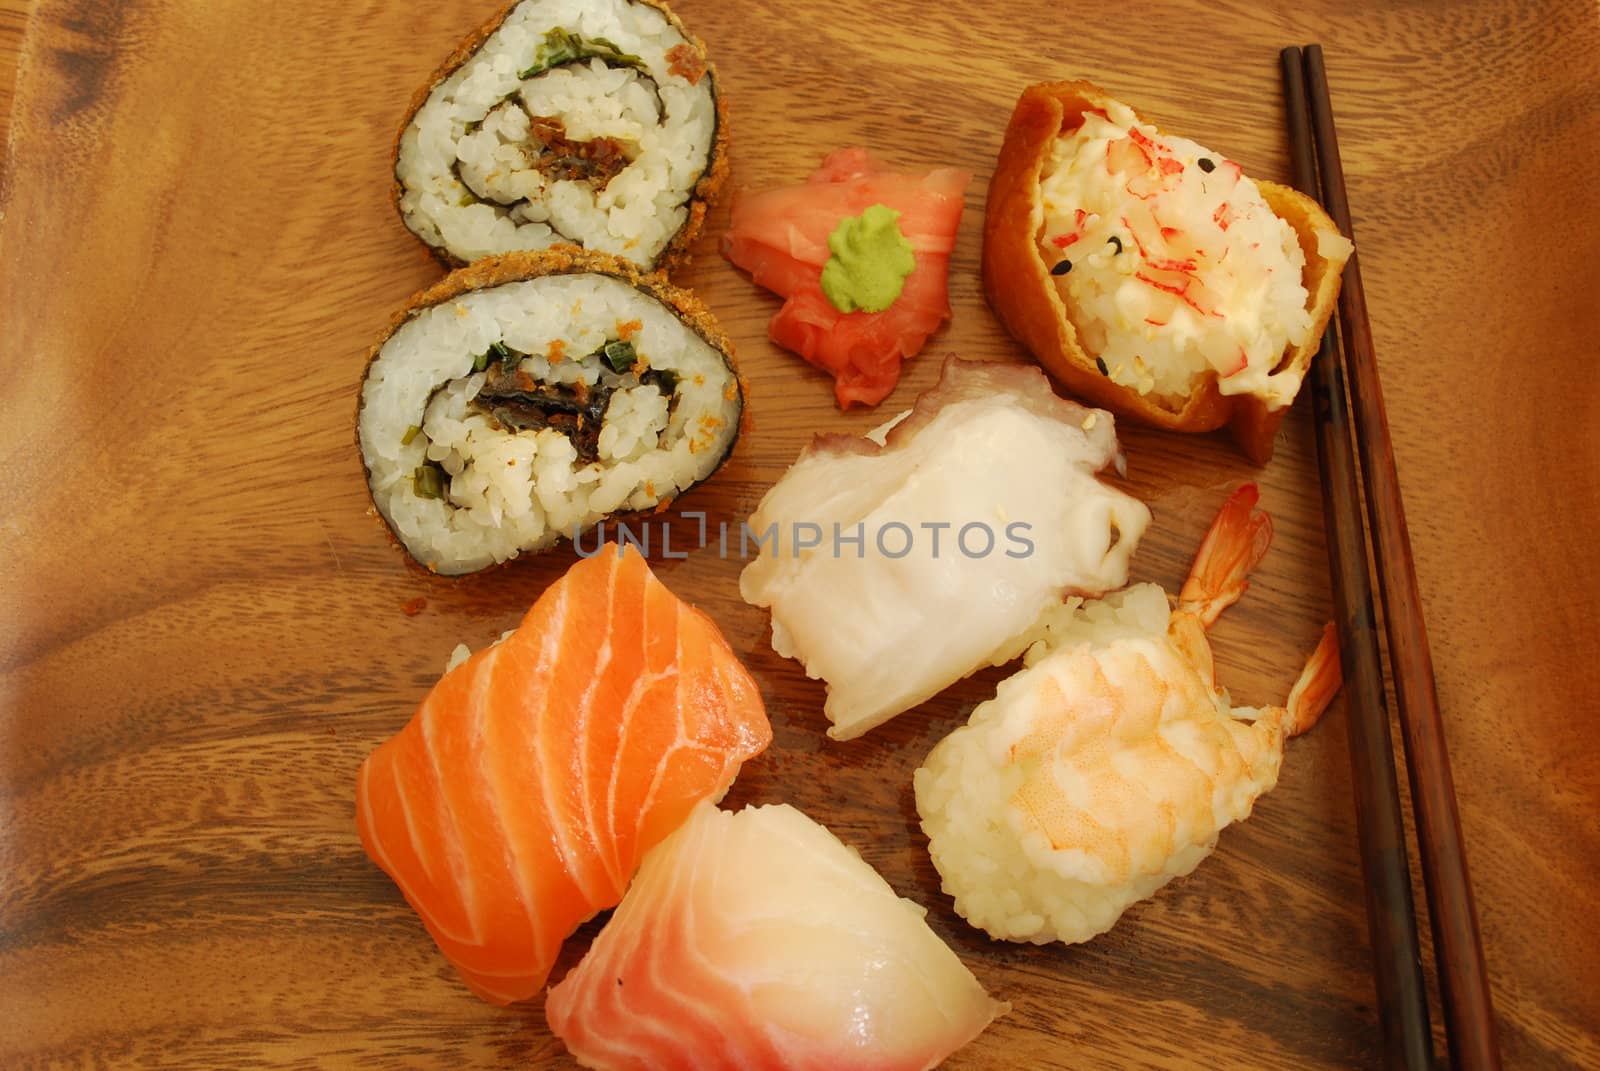 sushi meal with nigiris (salmon, swordfish, shrimp, octupus) and tofu/sardine rolls